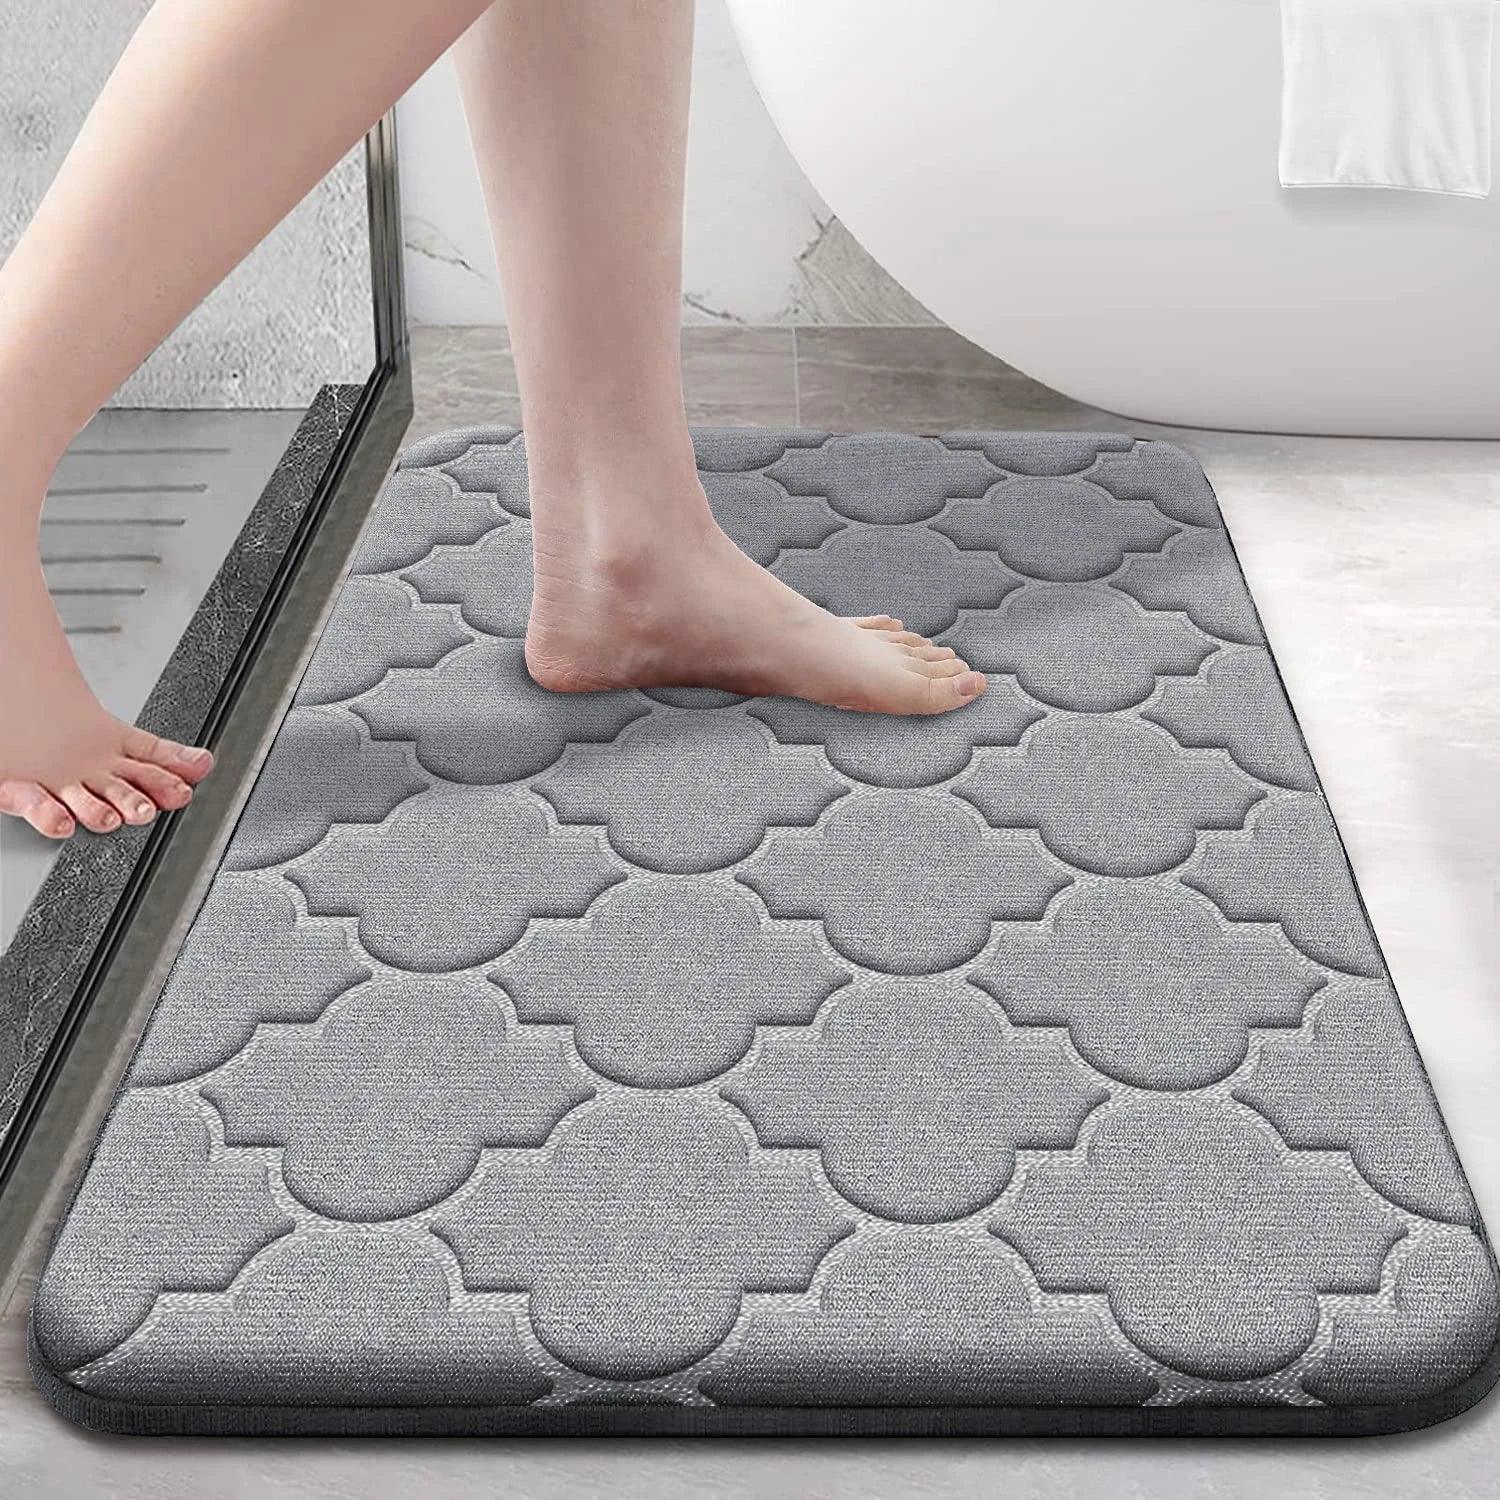 Luxurious Memory Foam Bath Mat with Anti-Slip Backing and Ultra Soft Feel  ourlum.com 03 light grey 40cm x 60cm 